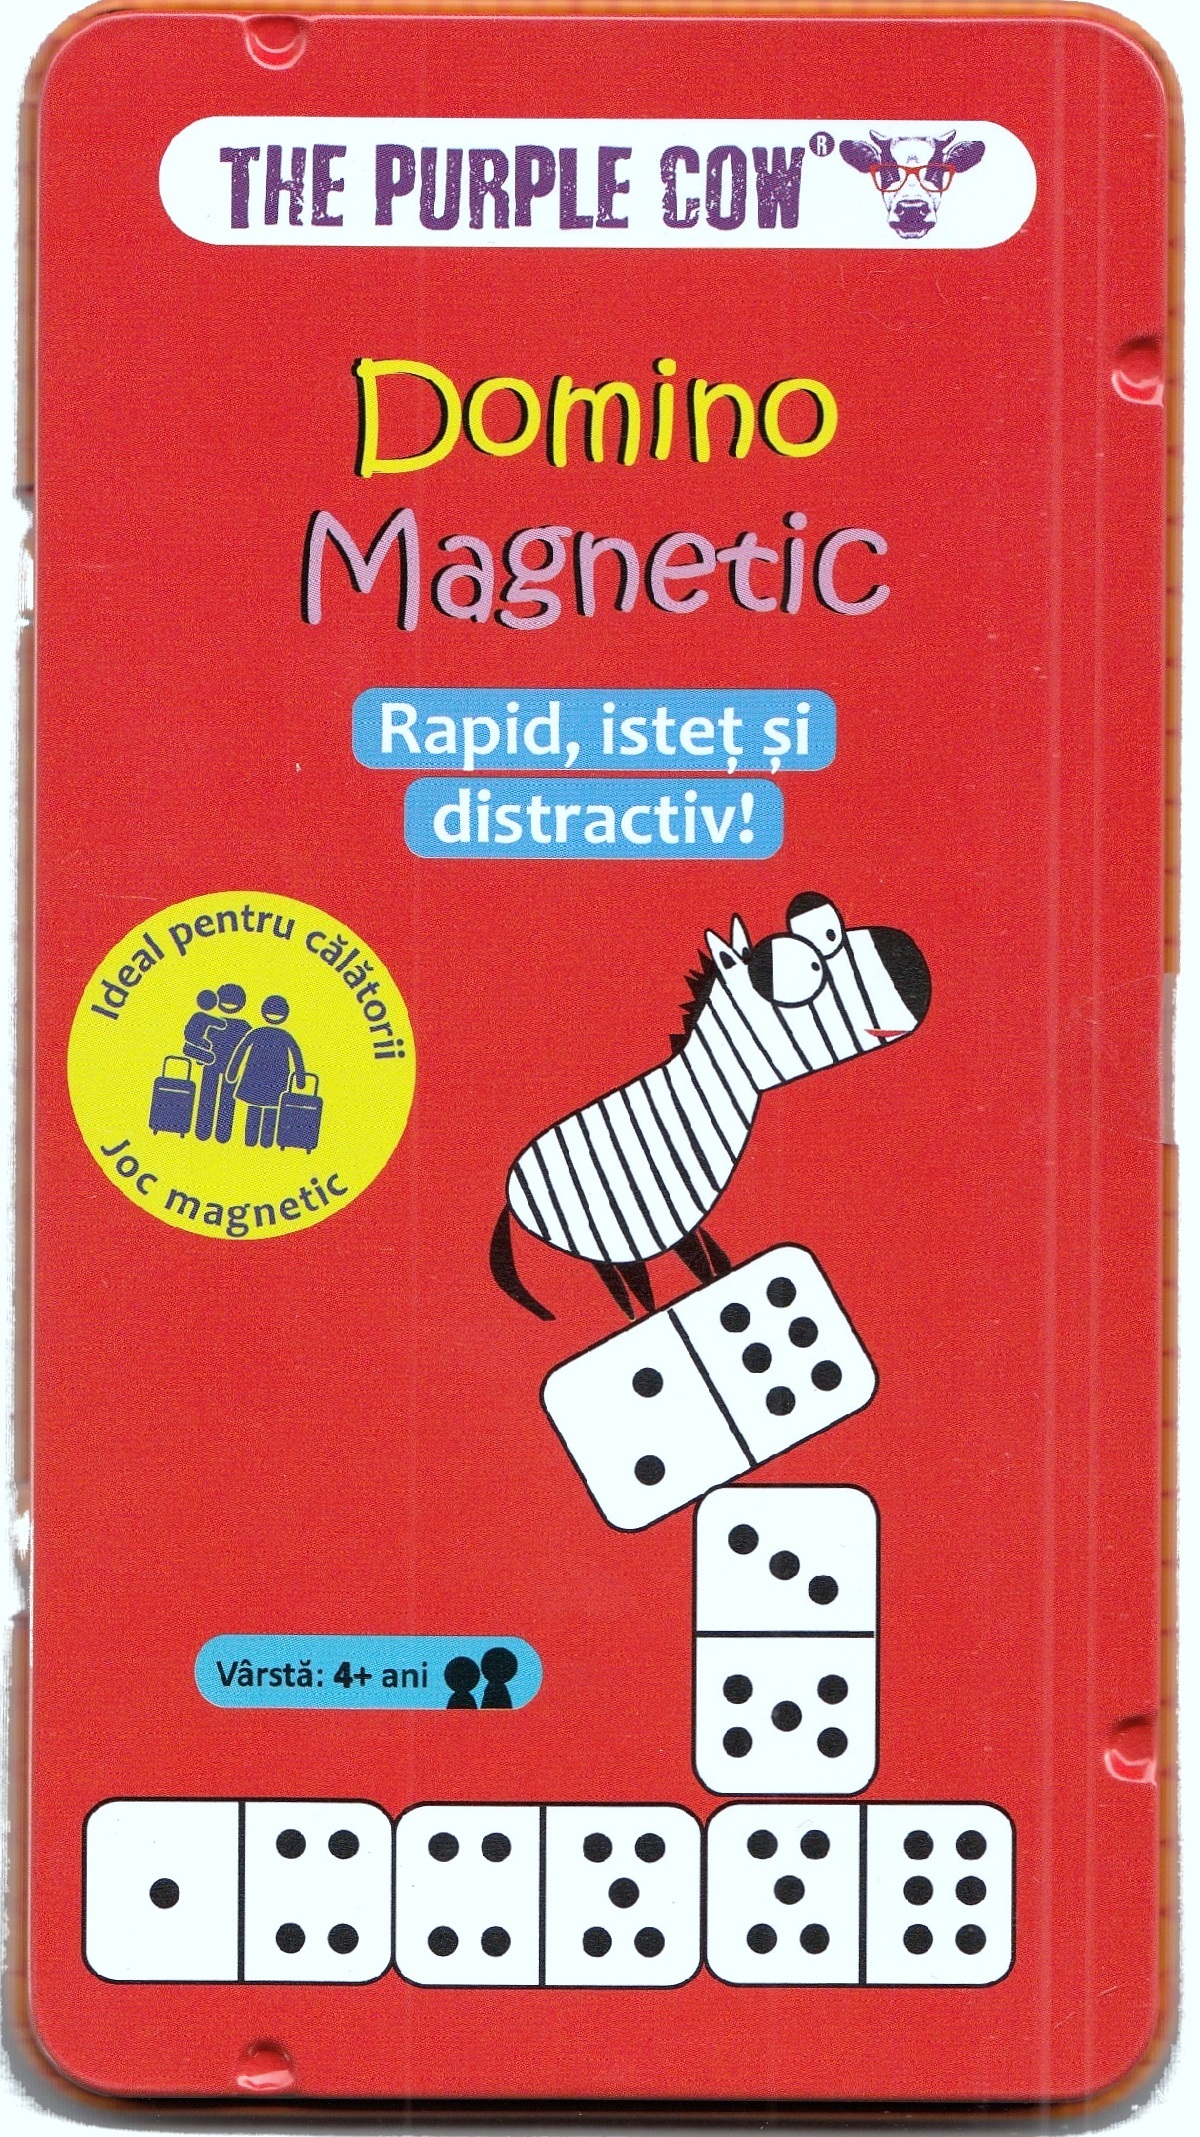 Joc magnetic: Domino